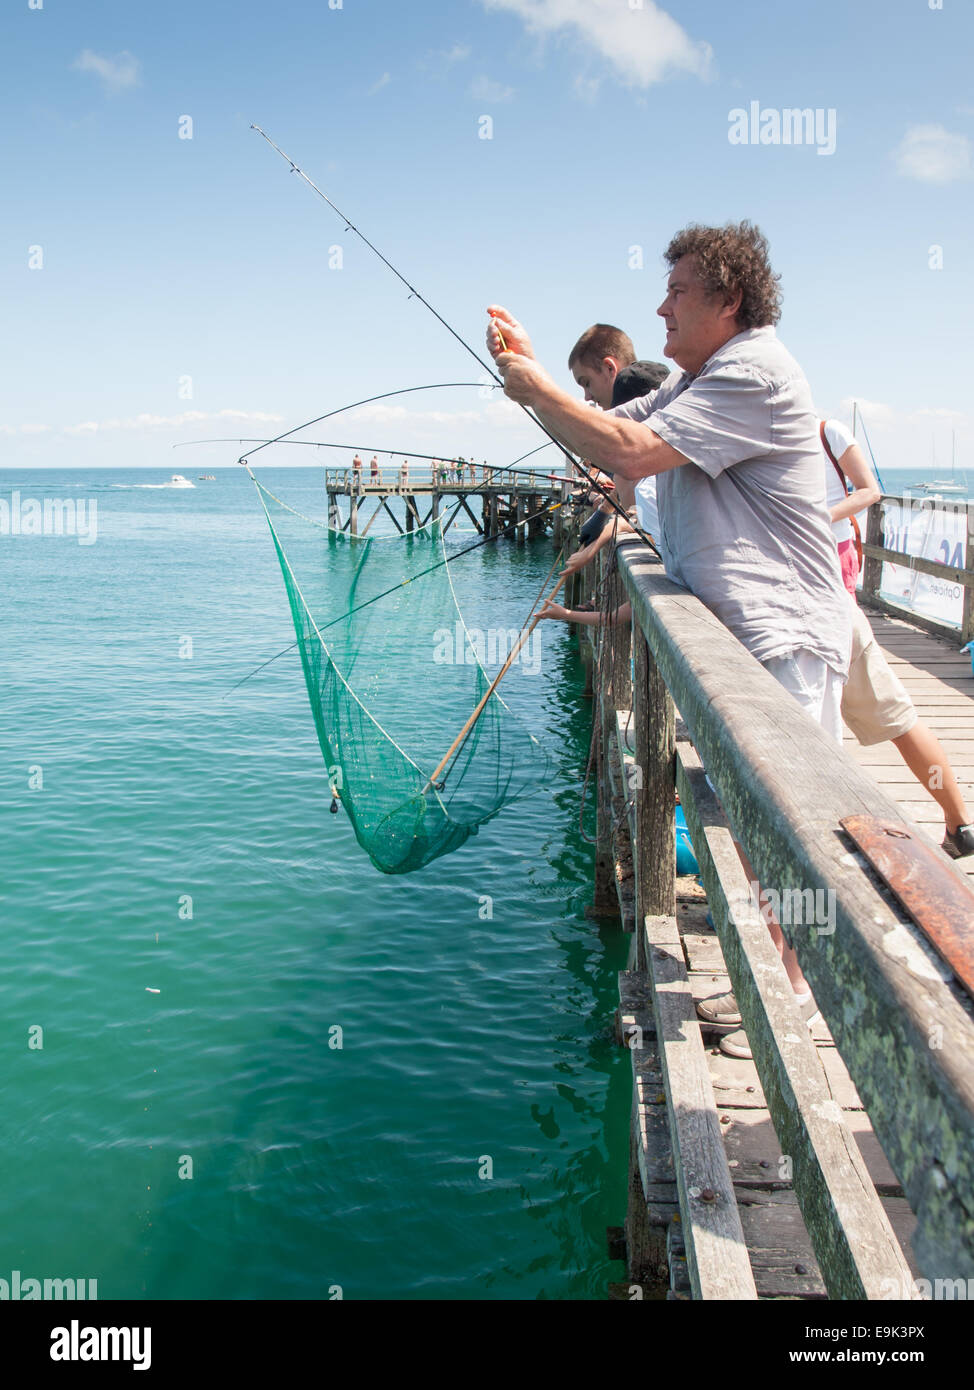 men fishing with rods and a carrelet lift net from a pier Noirmoutier-en-l'Île on the island noirmoutier Stock Photo